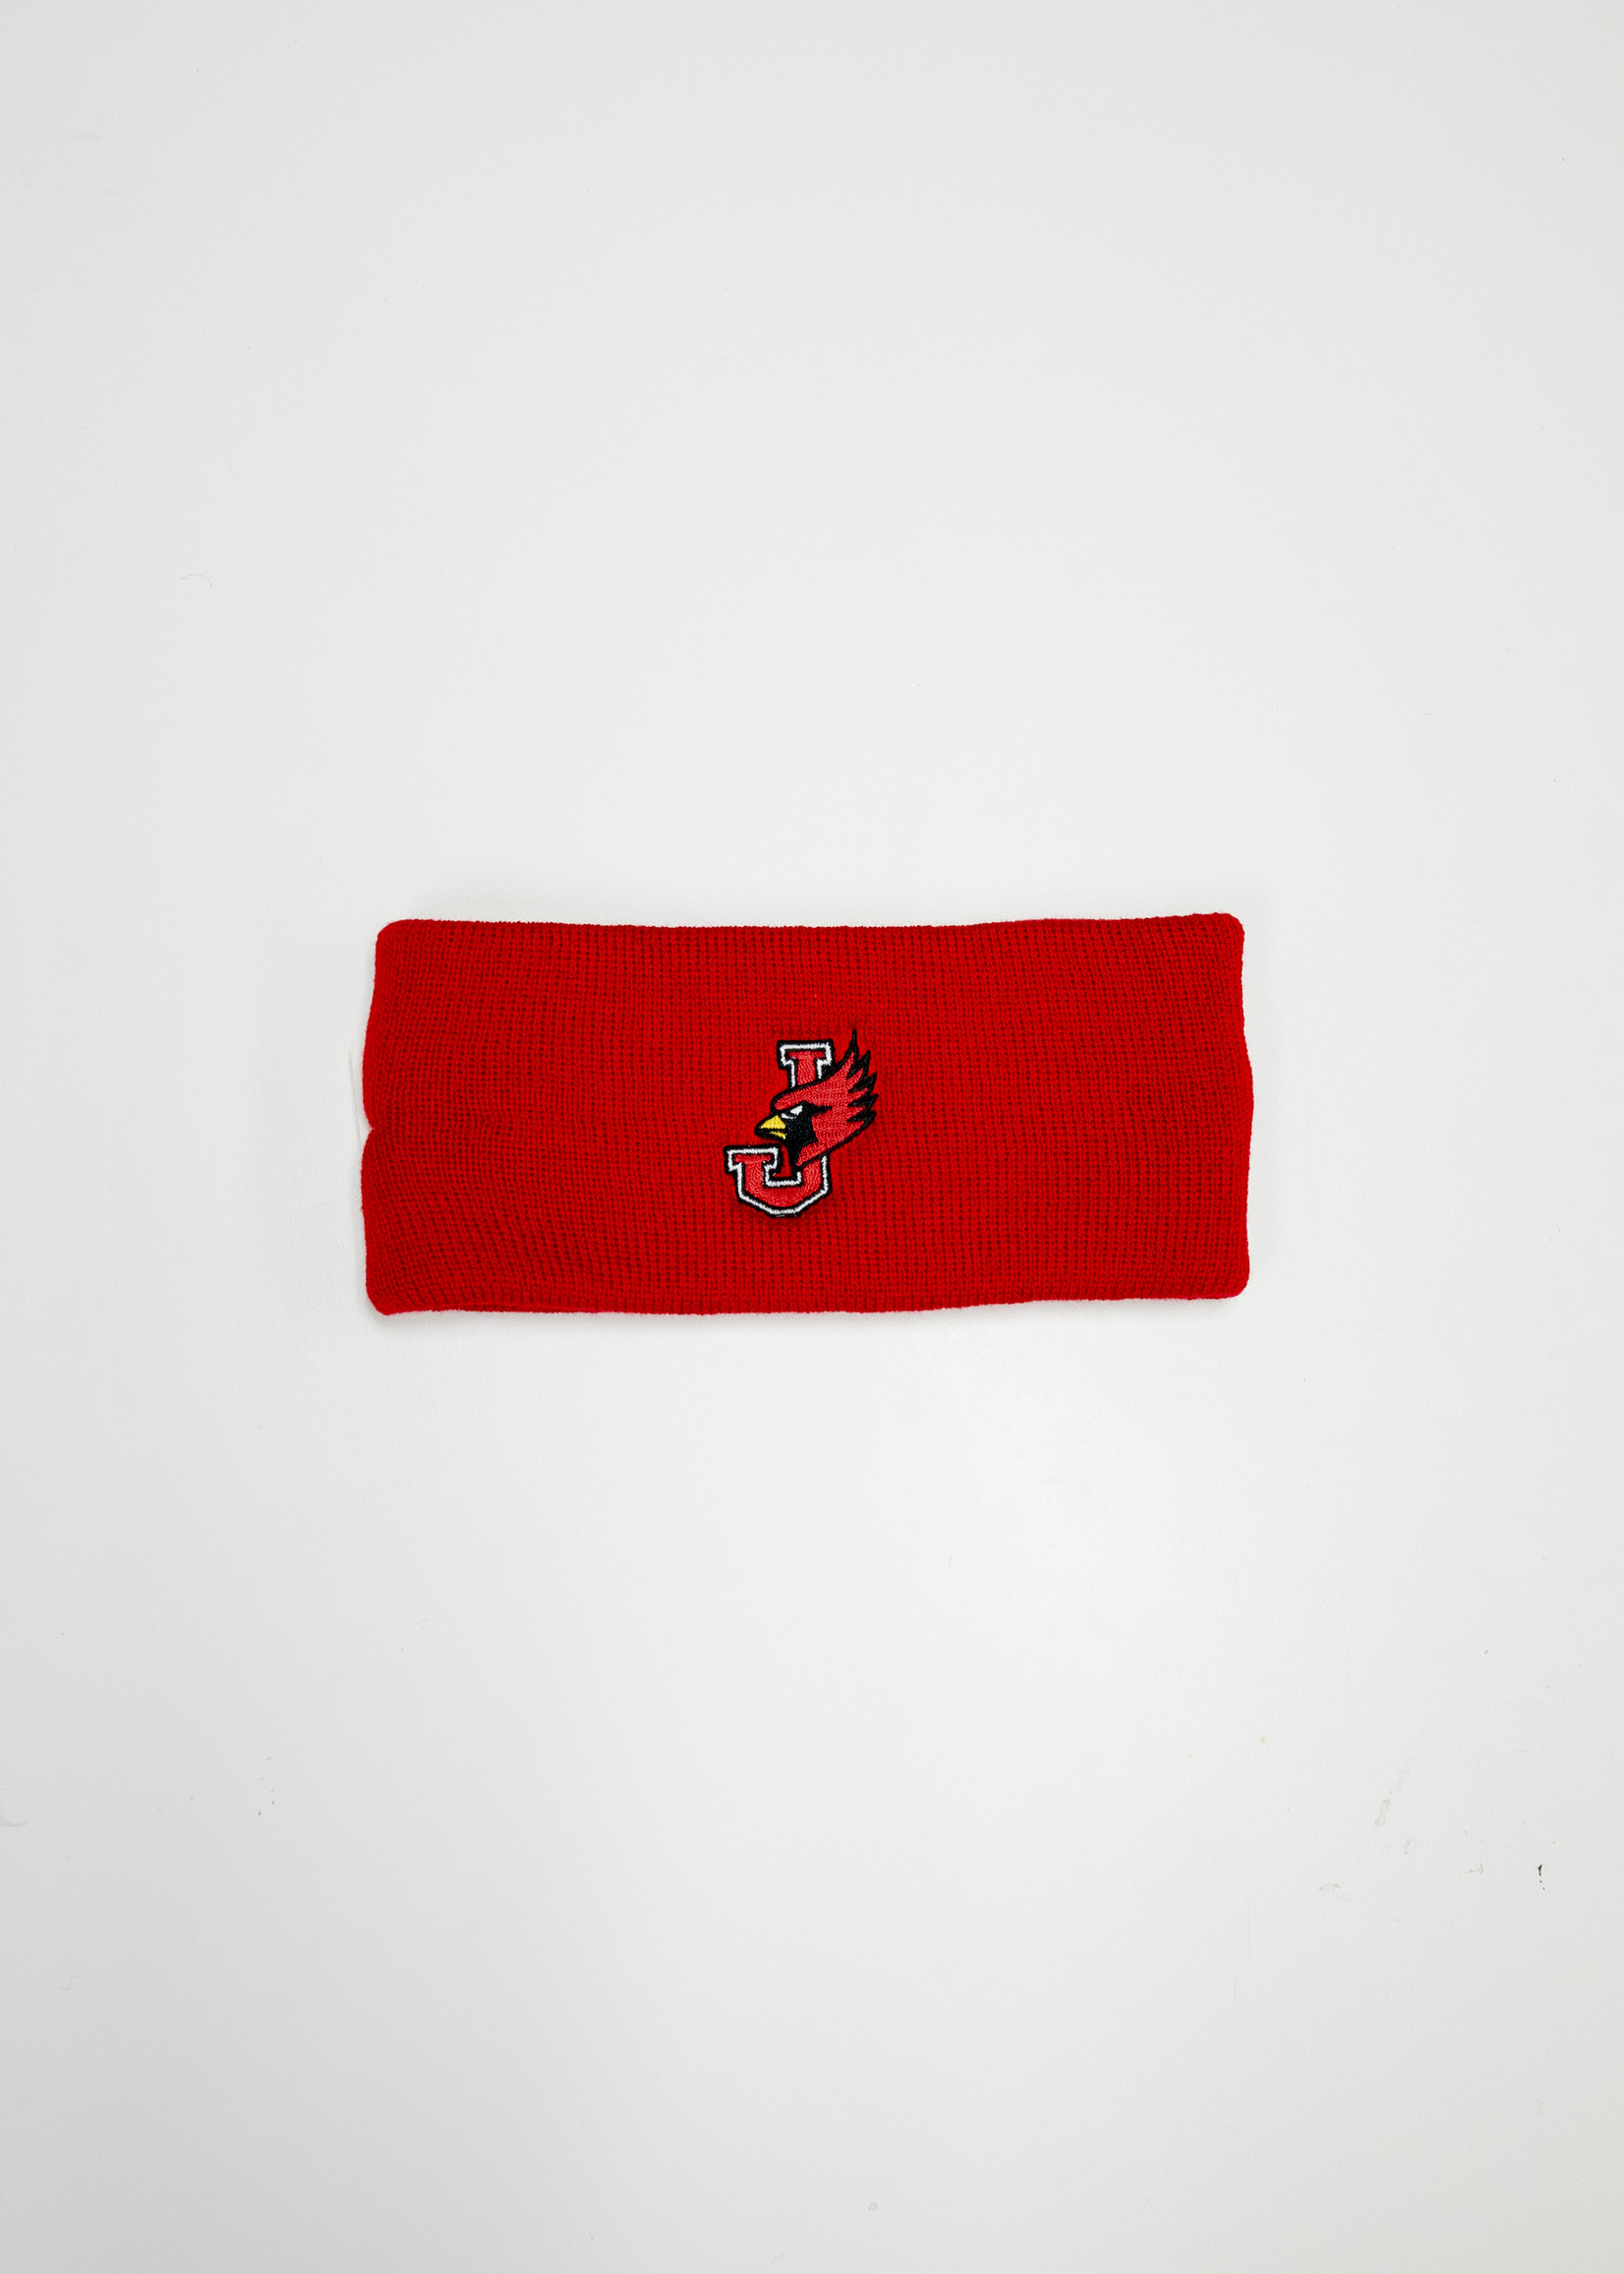 Jewell Red Cotton Headband